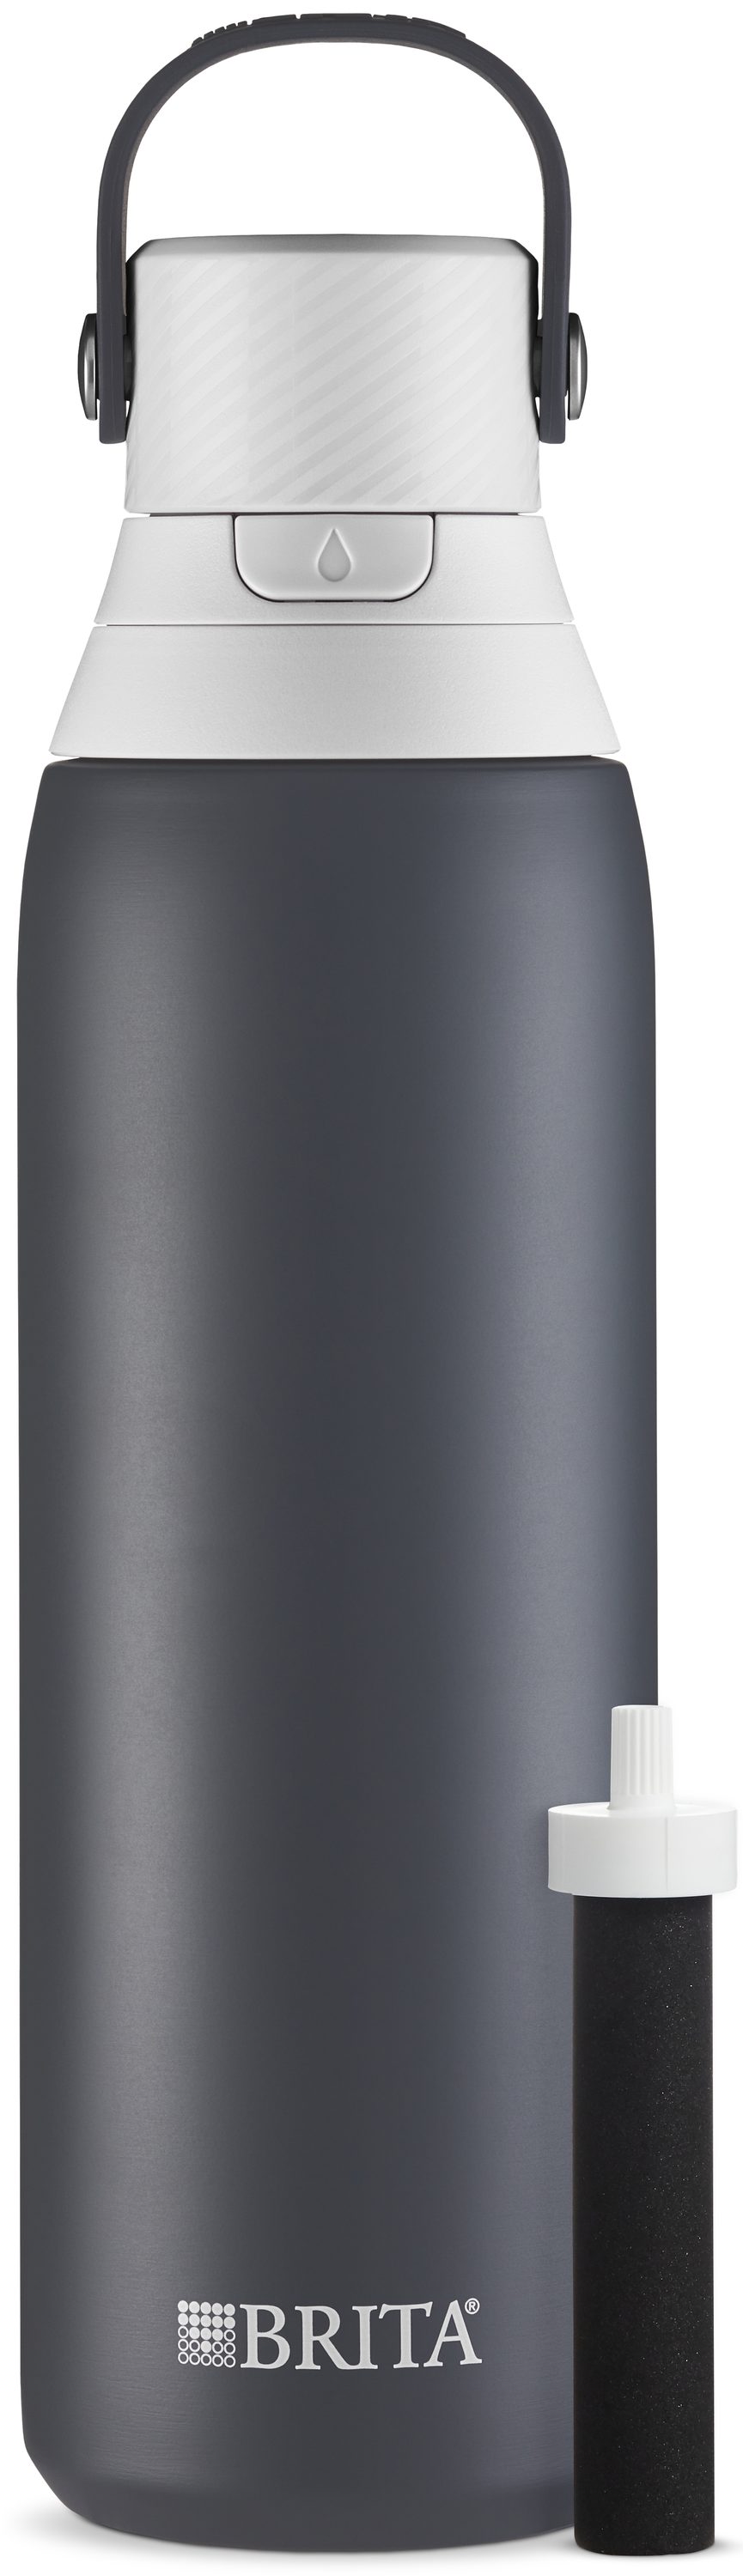 Brita® Premium Filtering Water Bottle - Carbon, 1 unit - Kroger